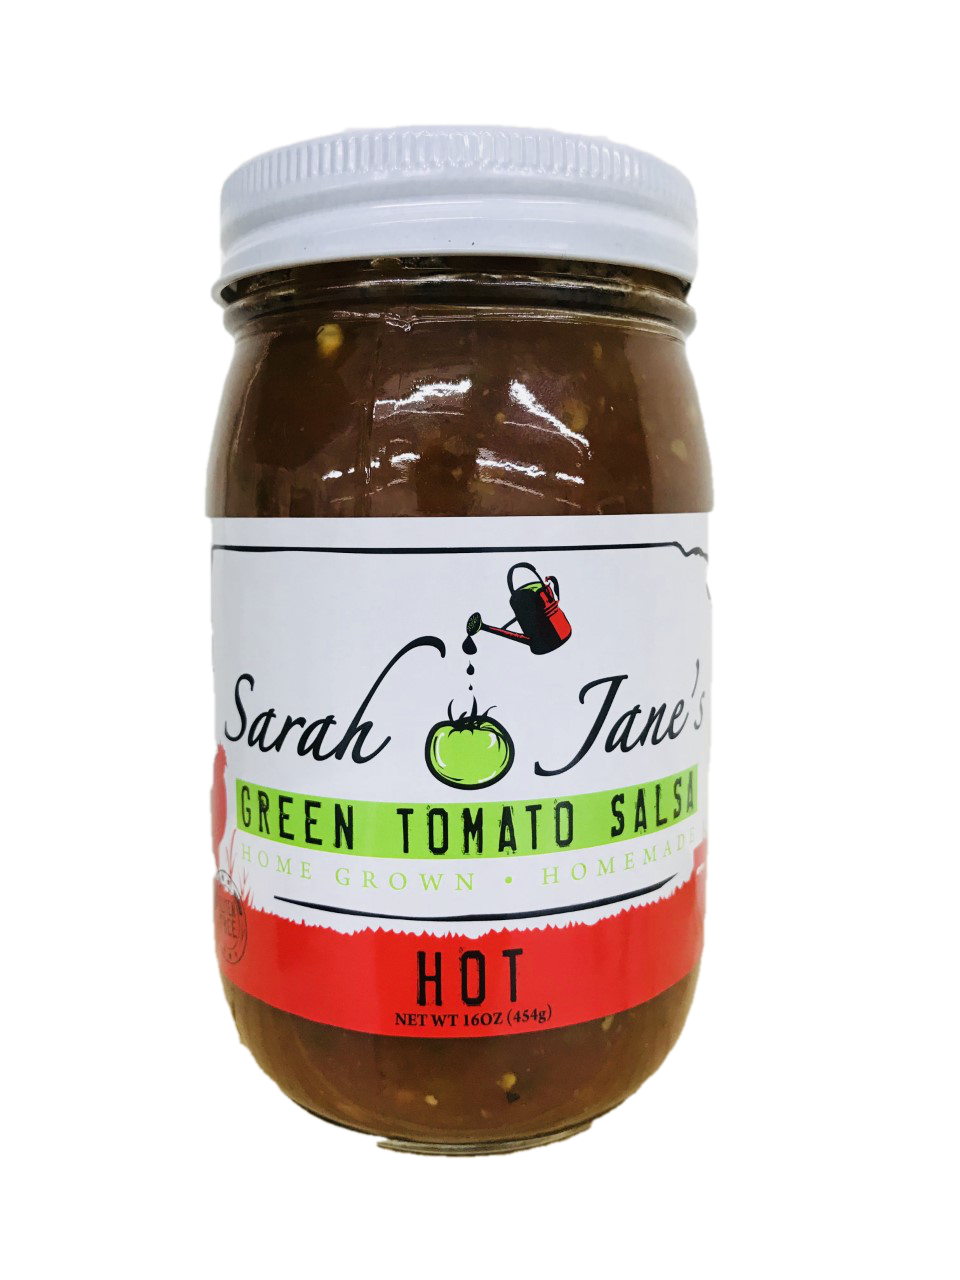 Sarah Jane's Green Tomato Salsa - Hot